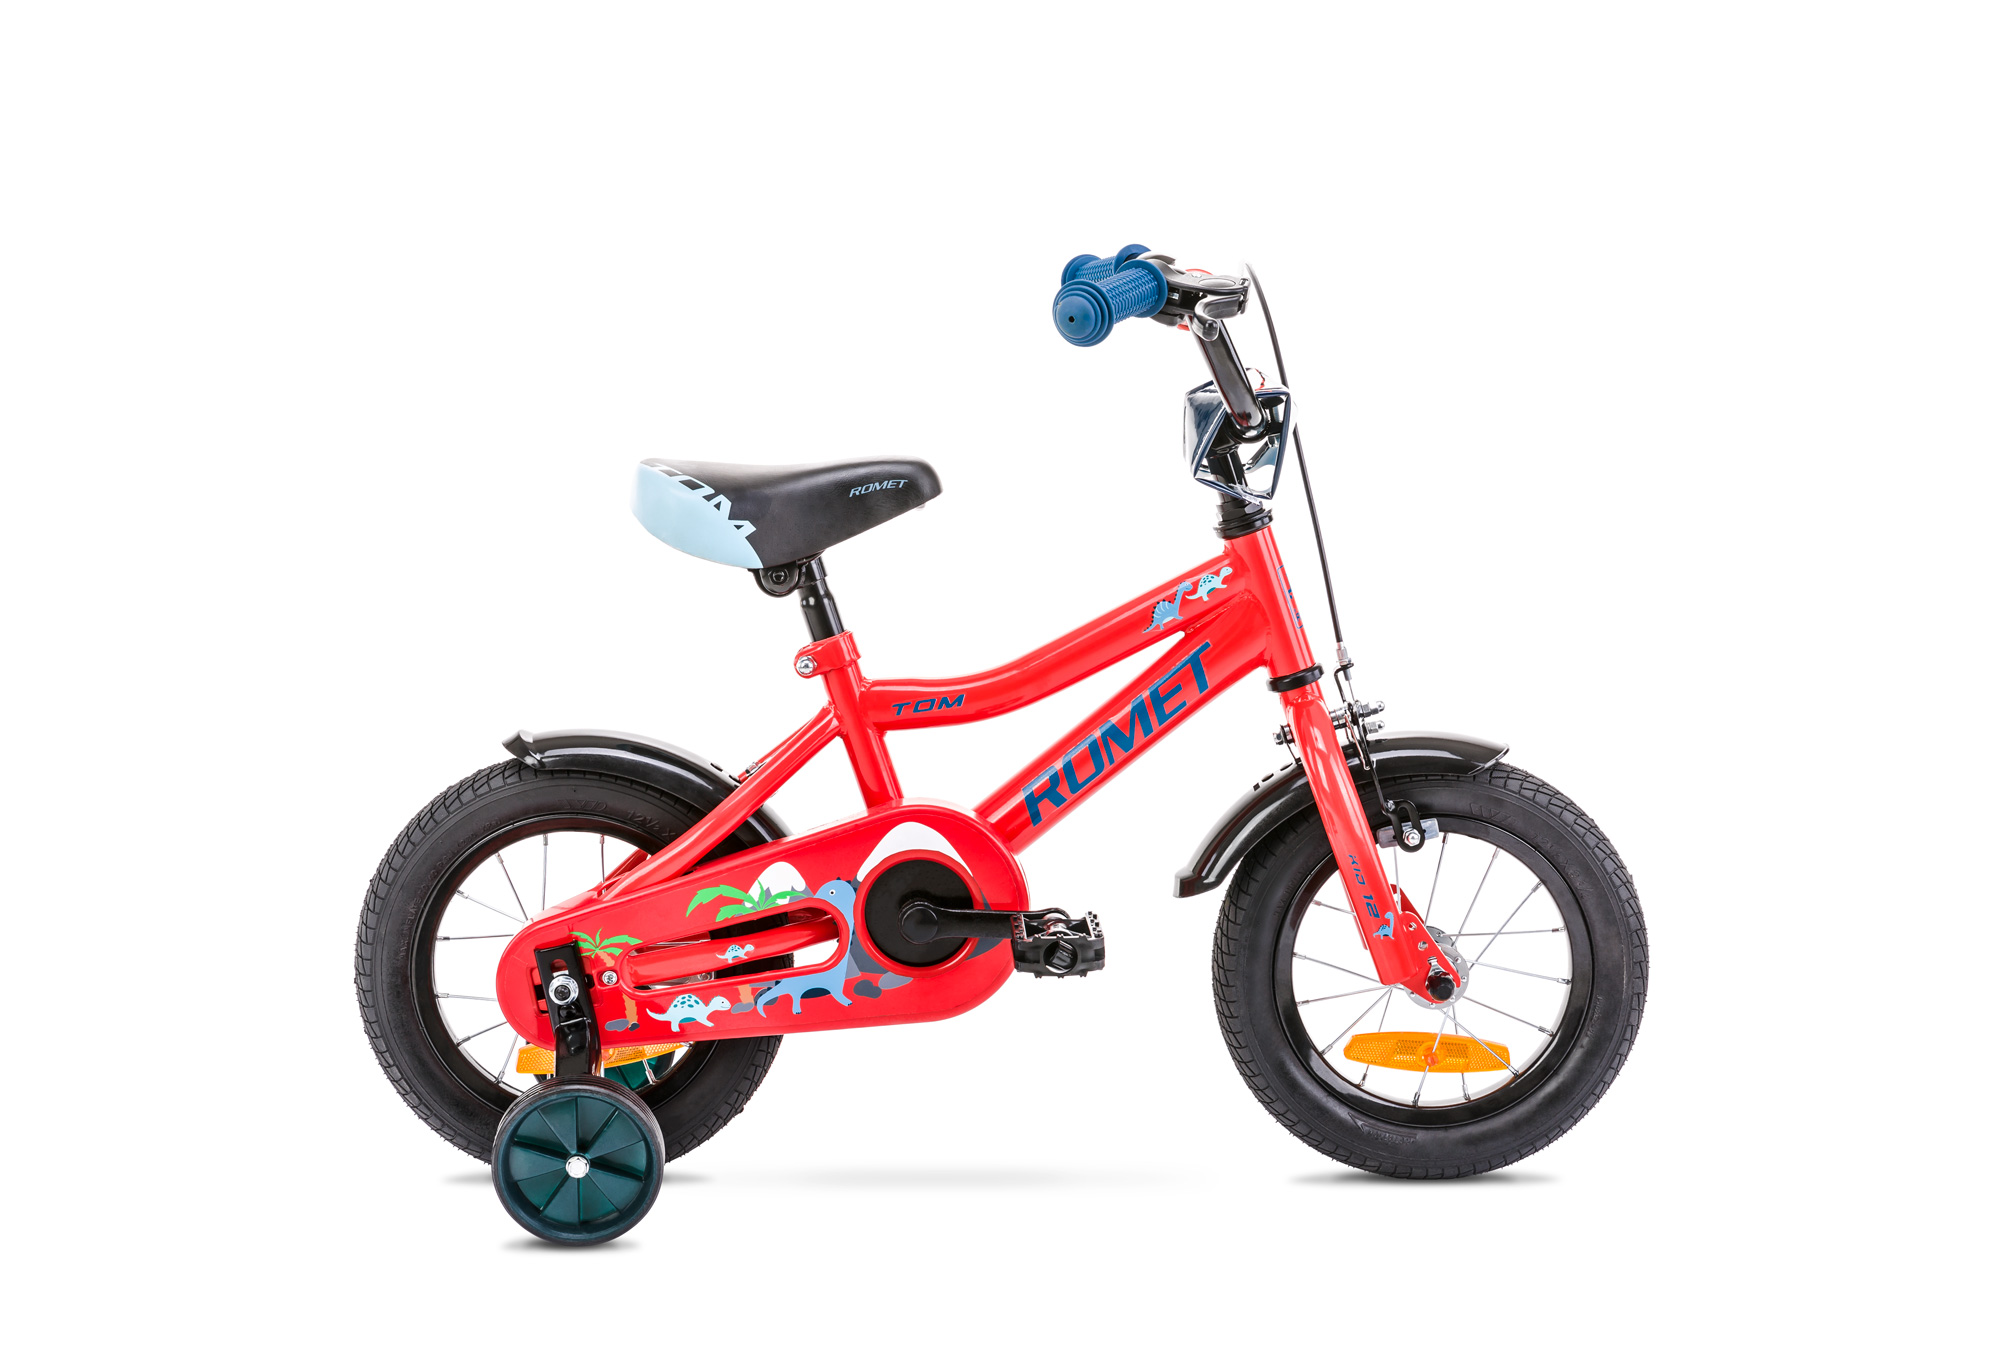 Bicicleta pentru copii Romet Tom 12 Rosu/Albastru 2022